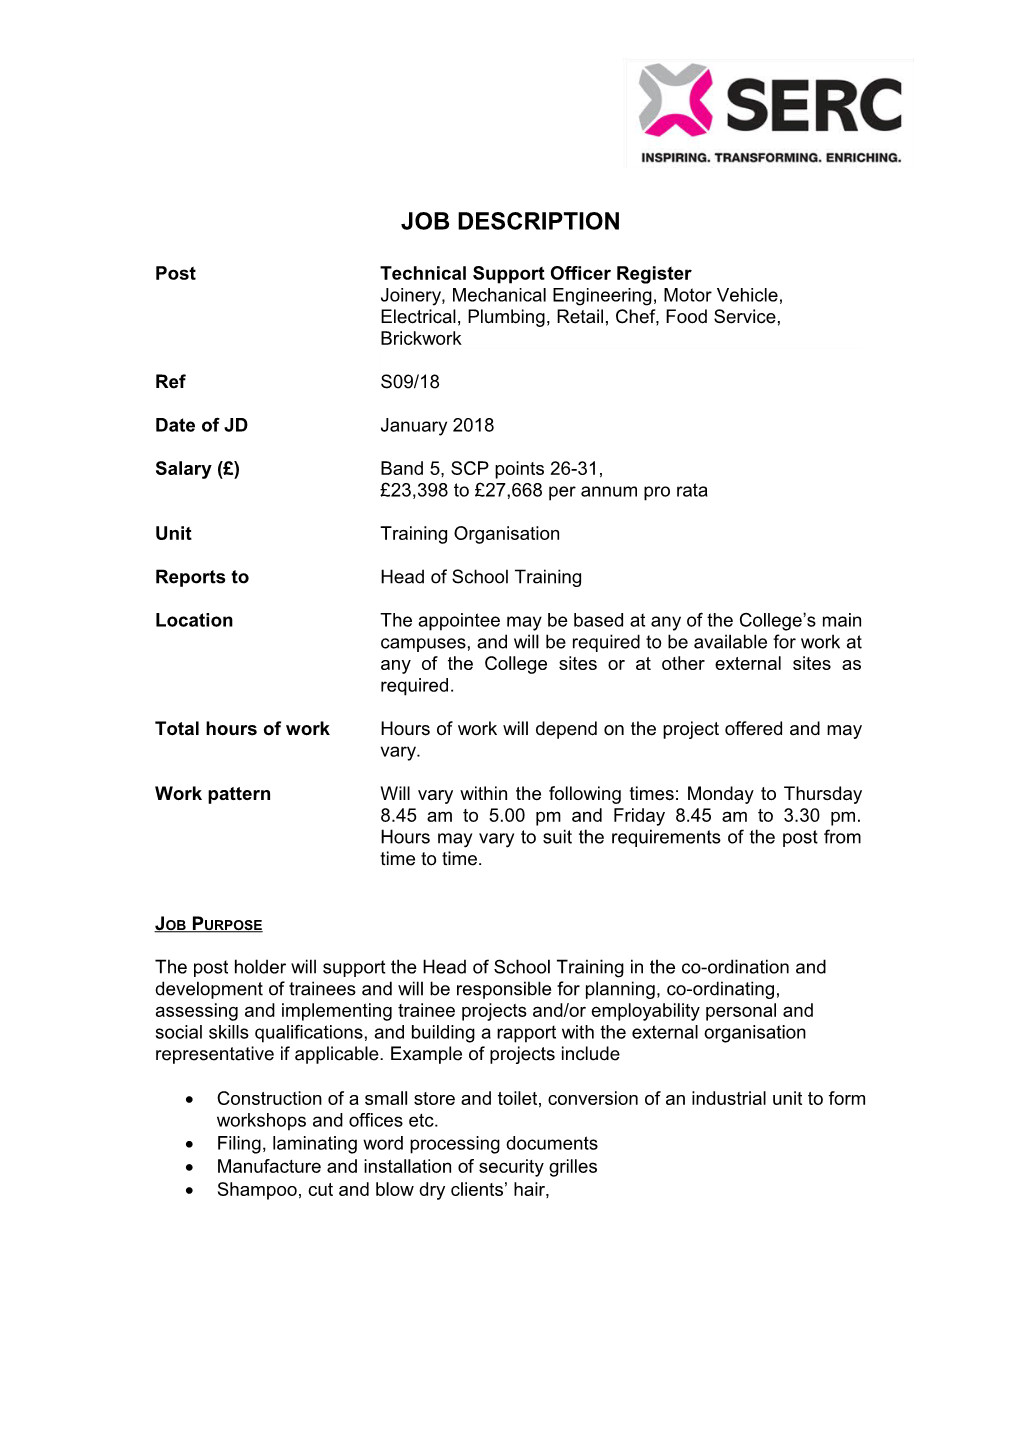 S52-11 Technical Support Officer Job Description